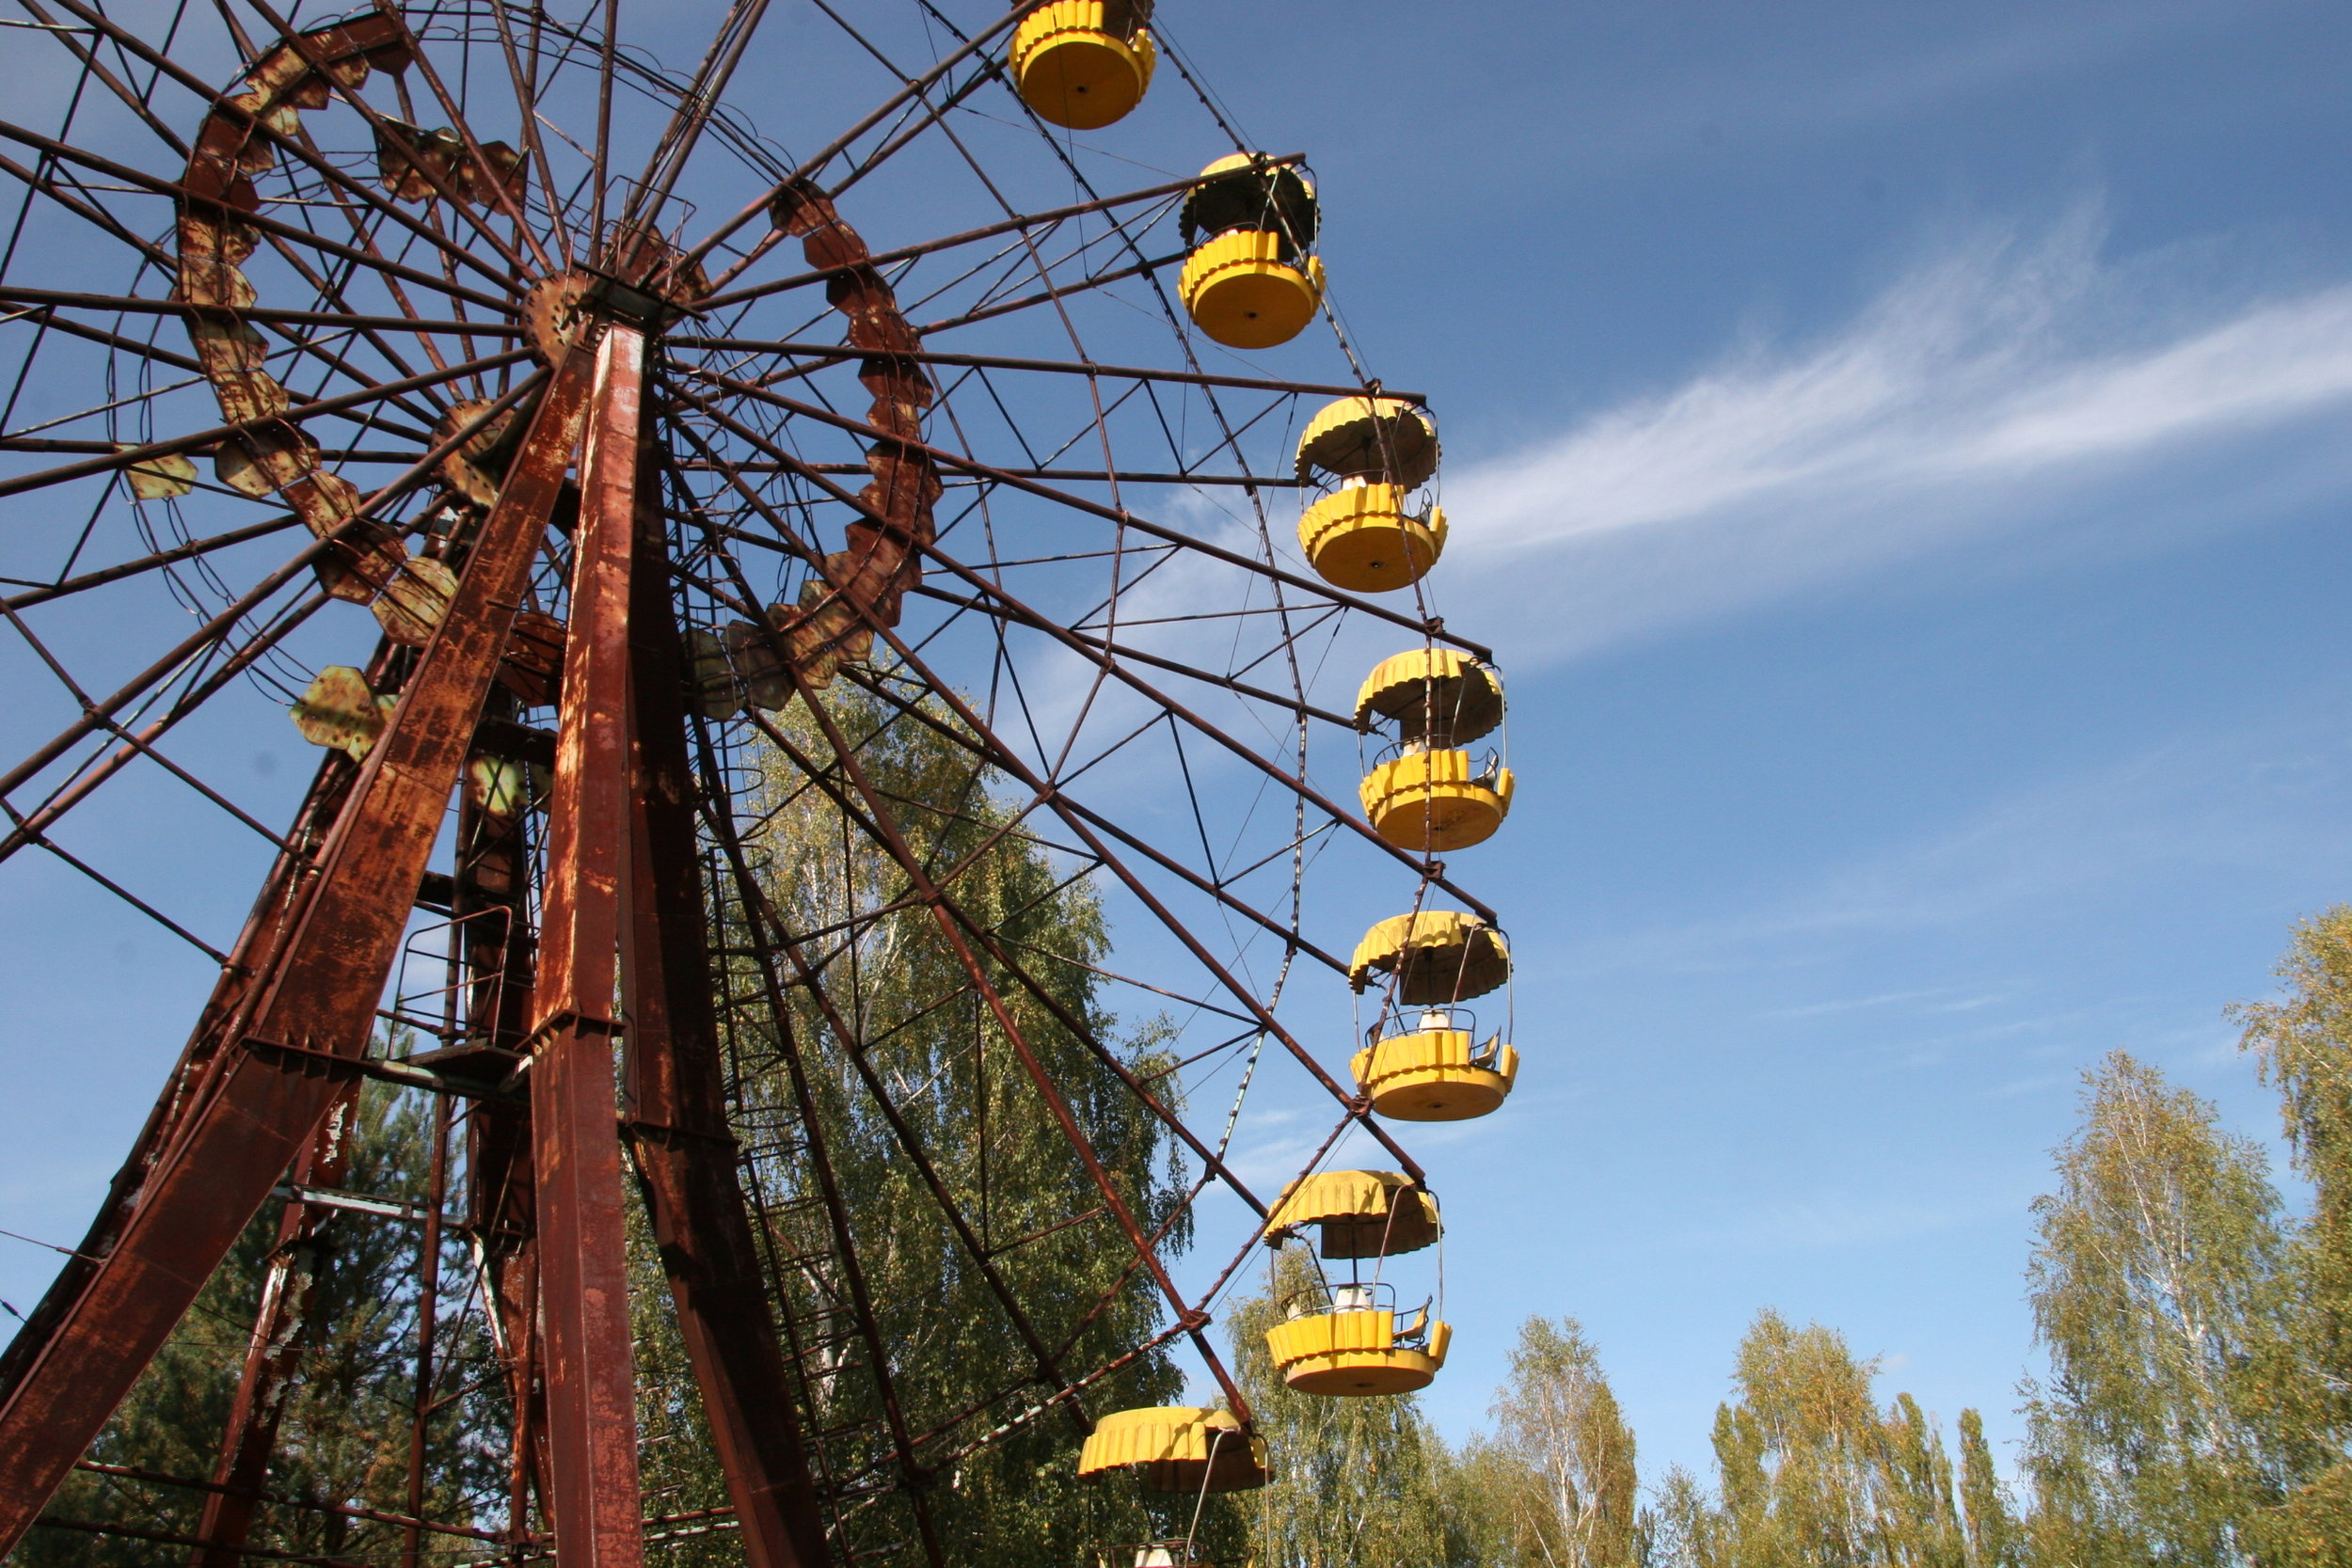  Abandoned Ferris Wheel in Pripyat 